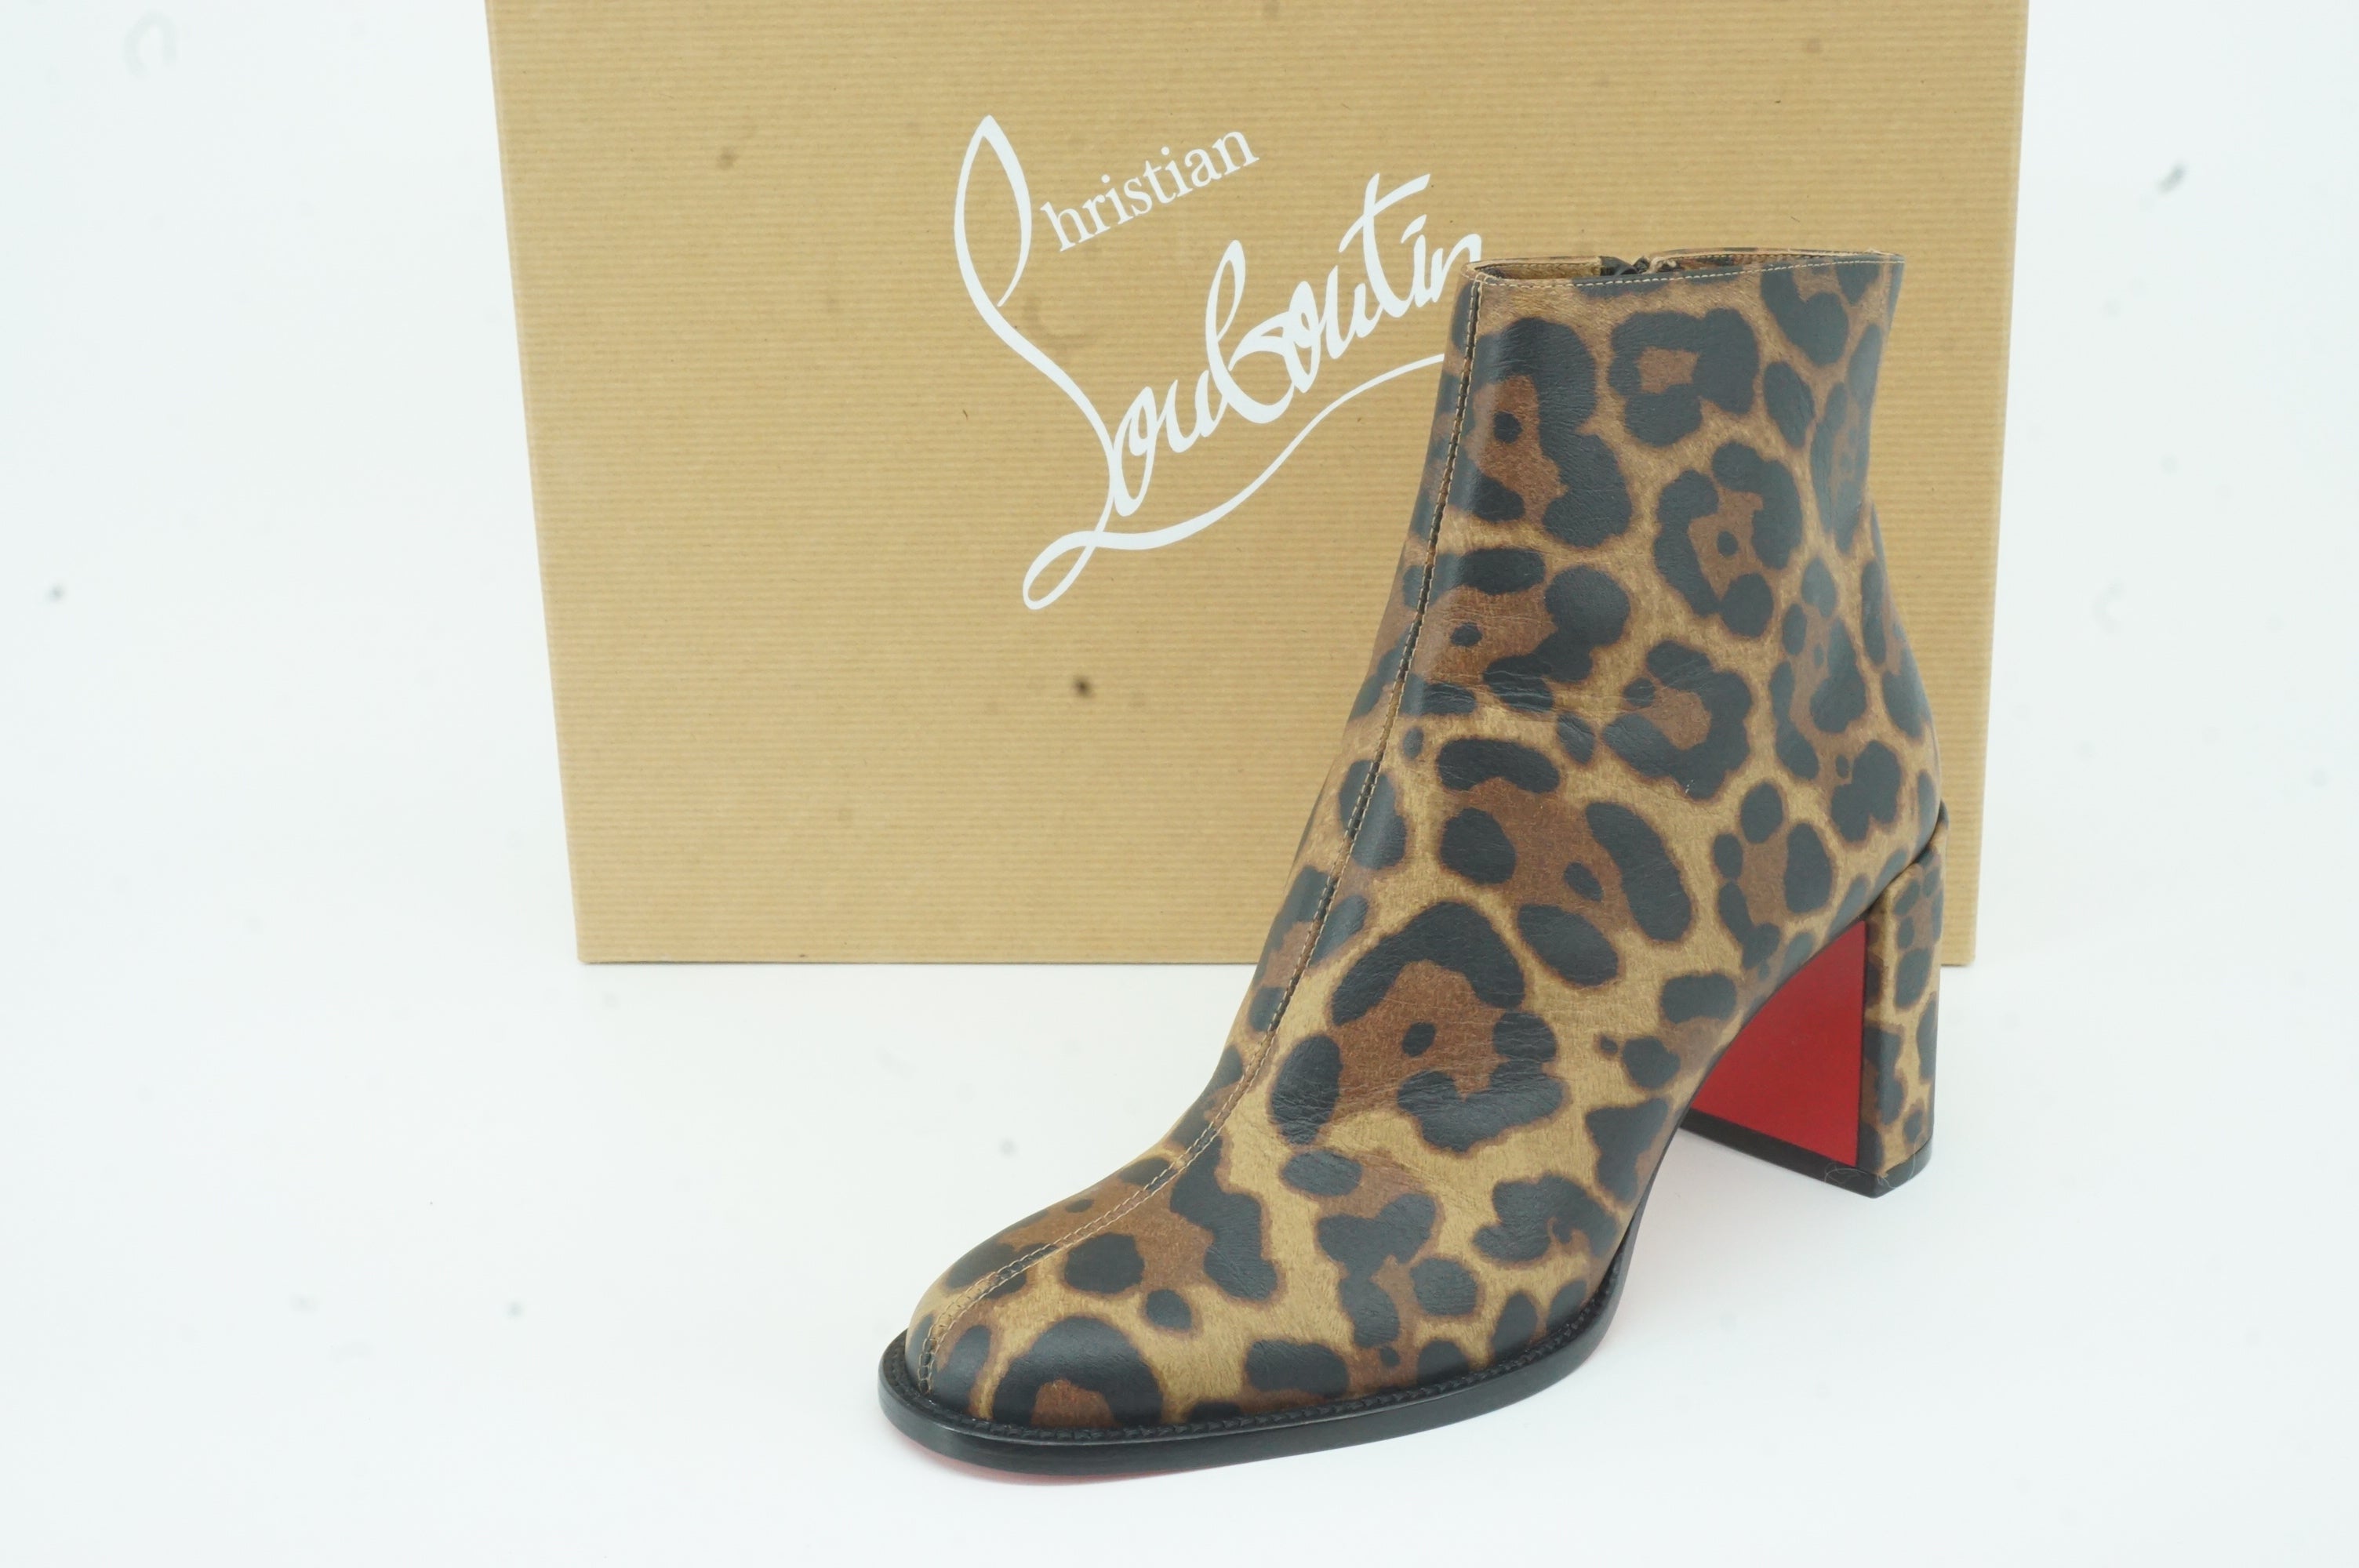 Christian Louboutin Adoxa 70 Ankle Bootie Size 37 NIB $1245 Leopard red bottom